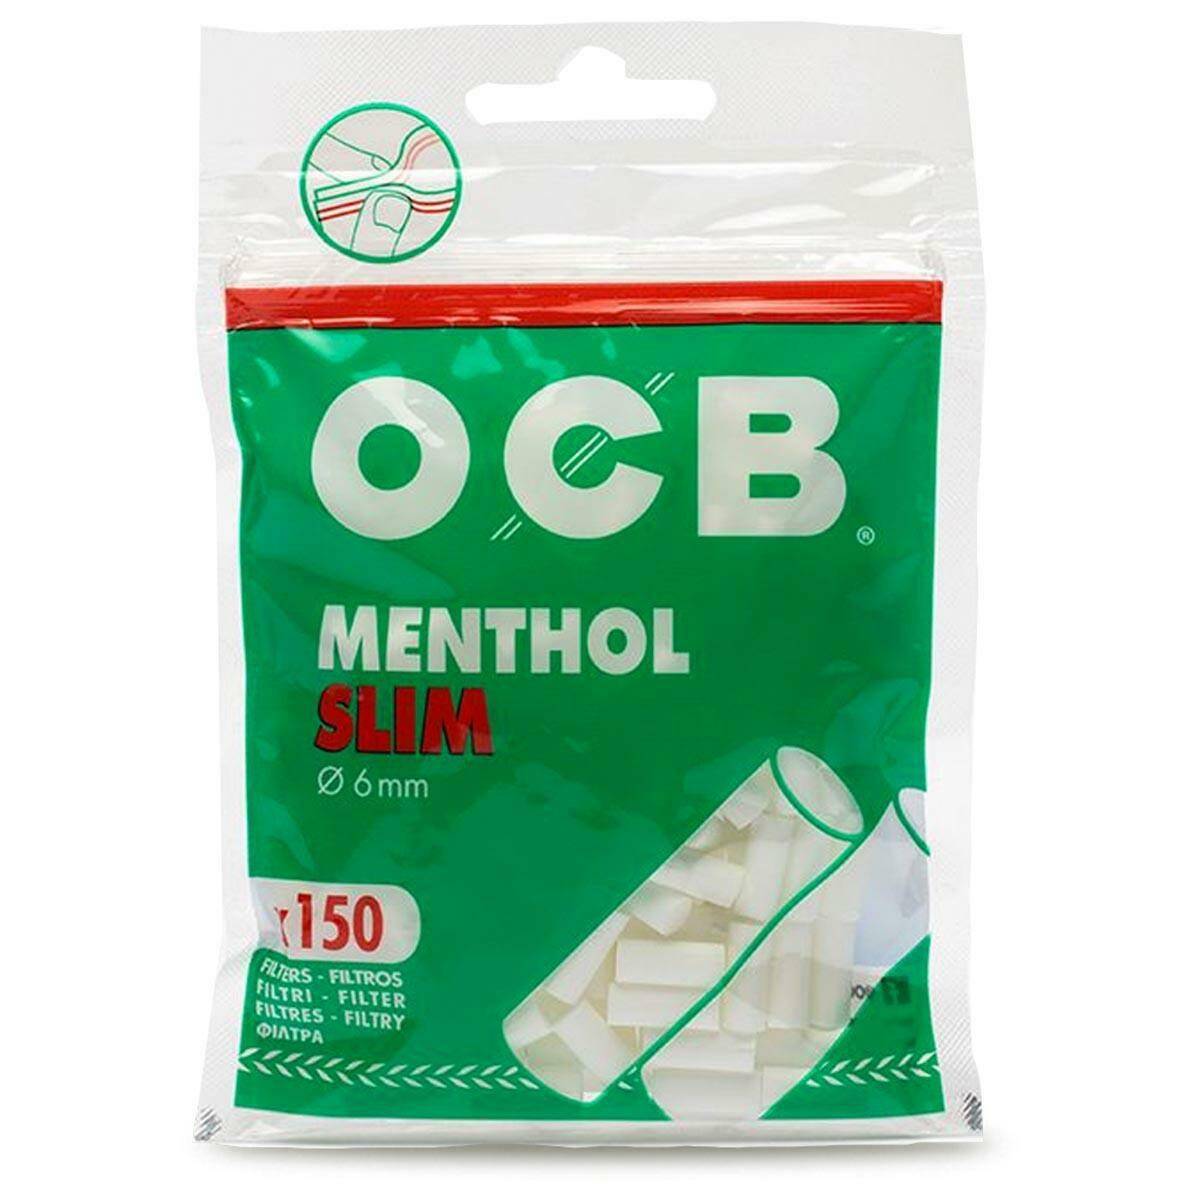 OCB Ø6 Slim Menthol Filters